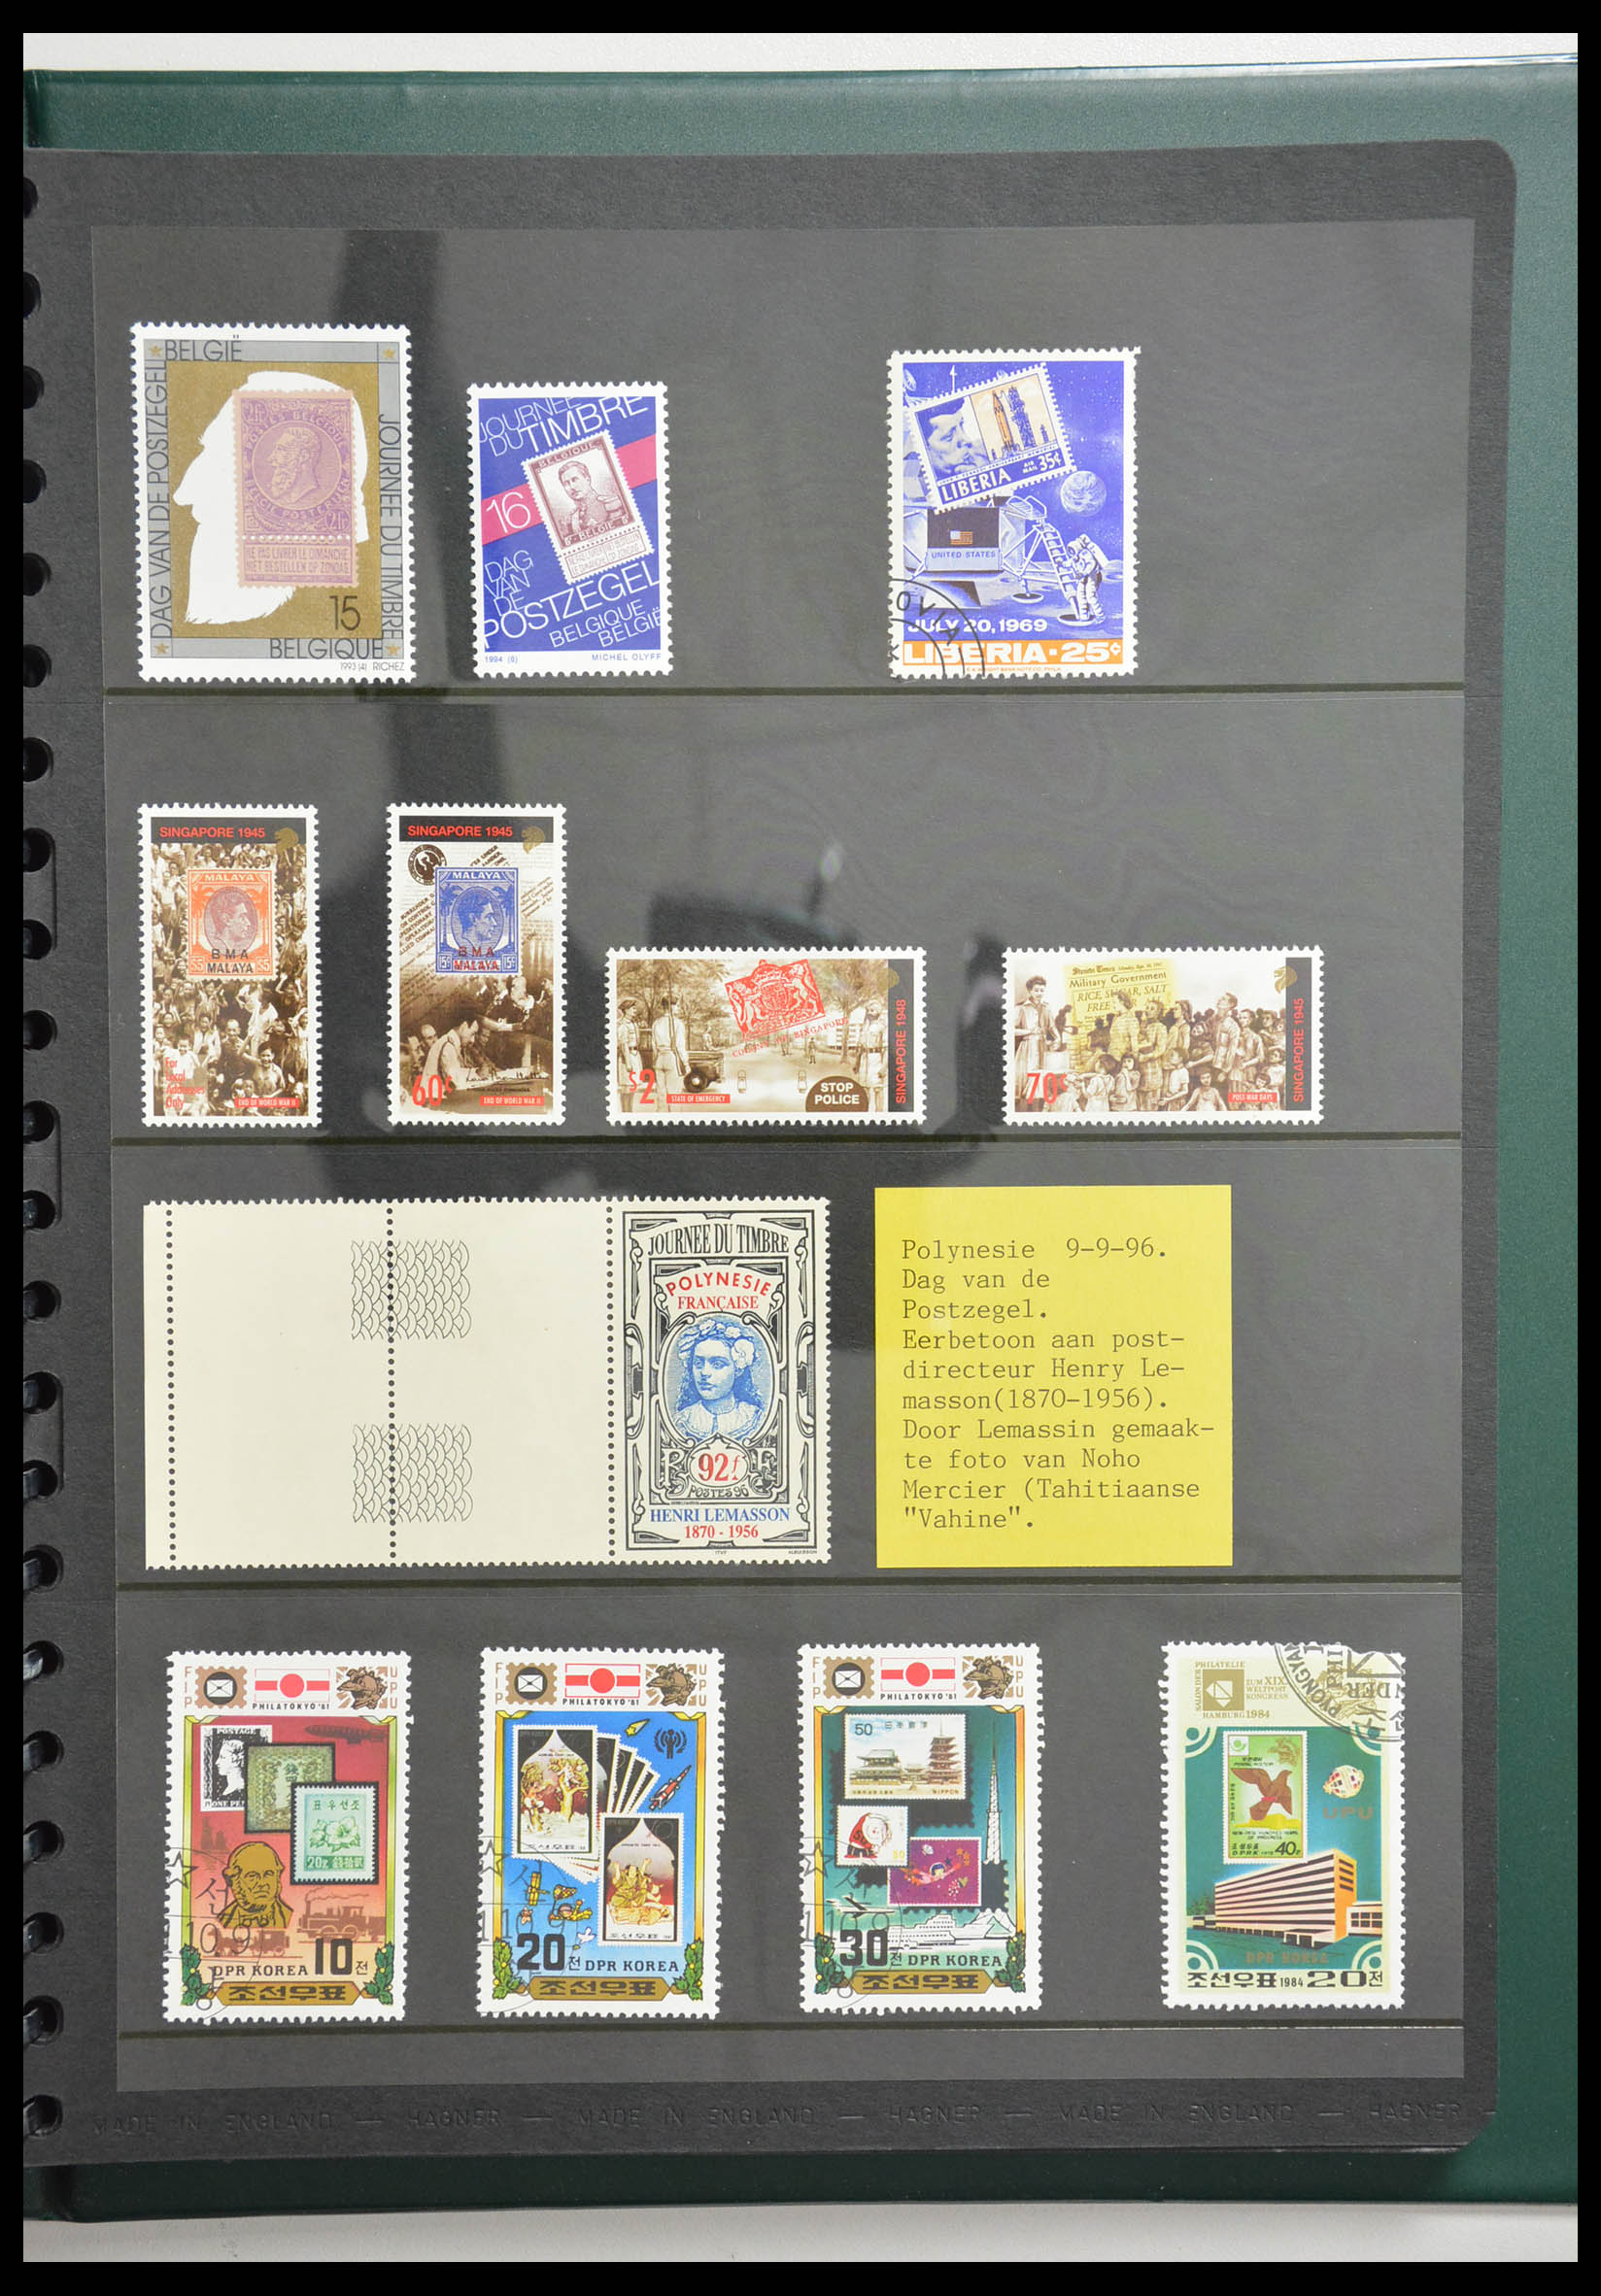 28337 072 - 28337 Postzegel op postzegel 1840-2001.